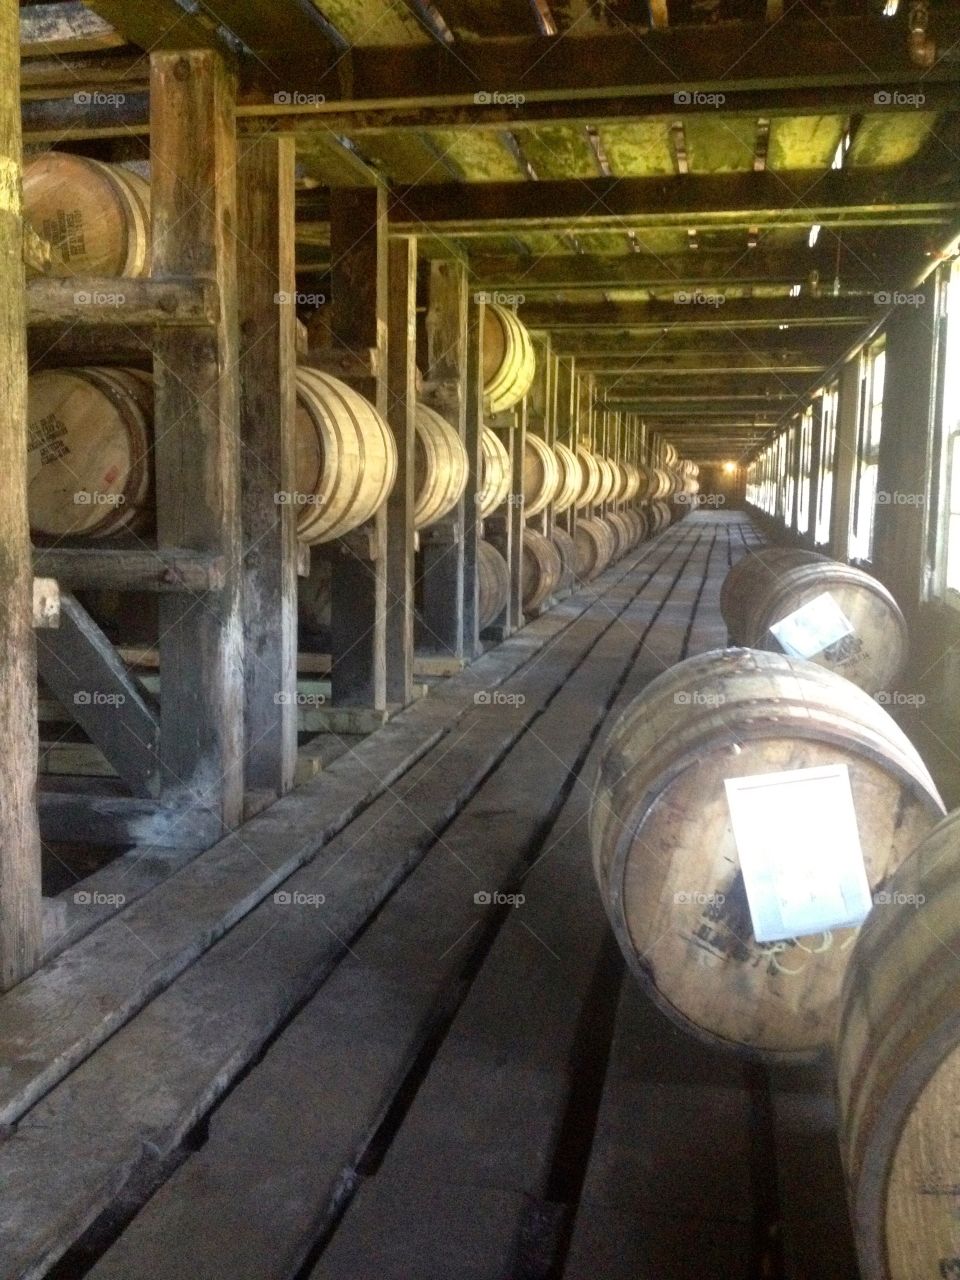 Bourbon collection
